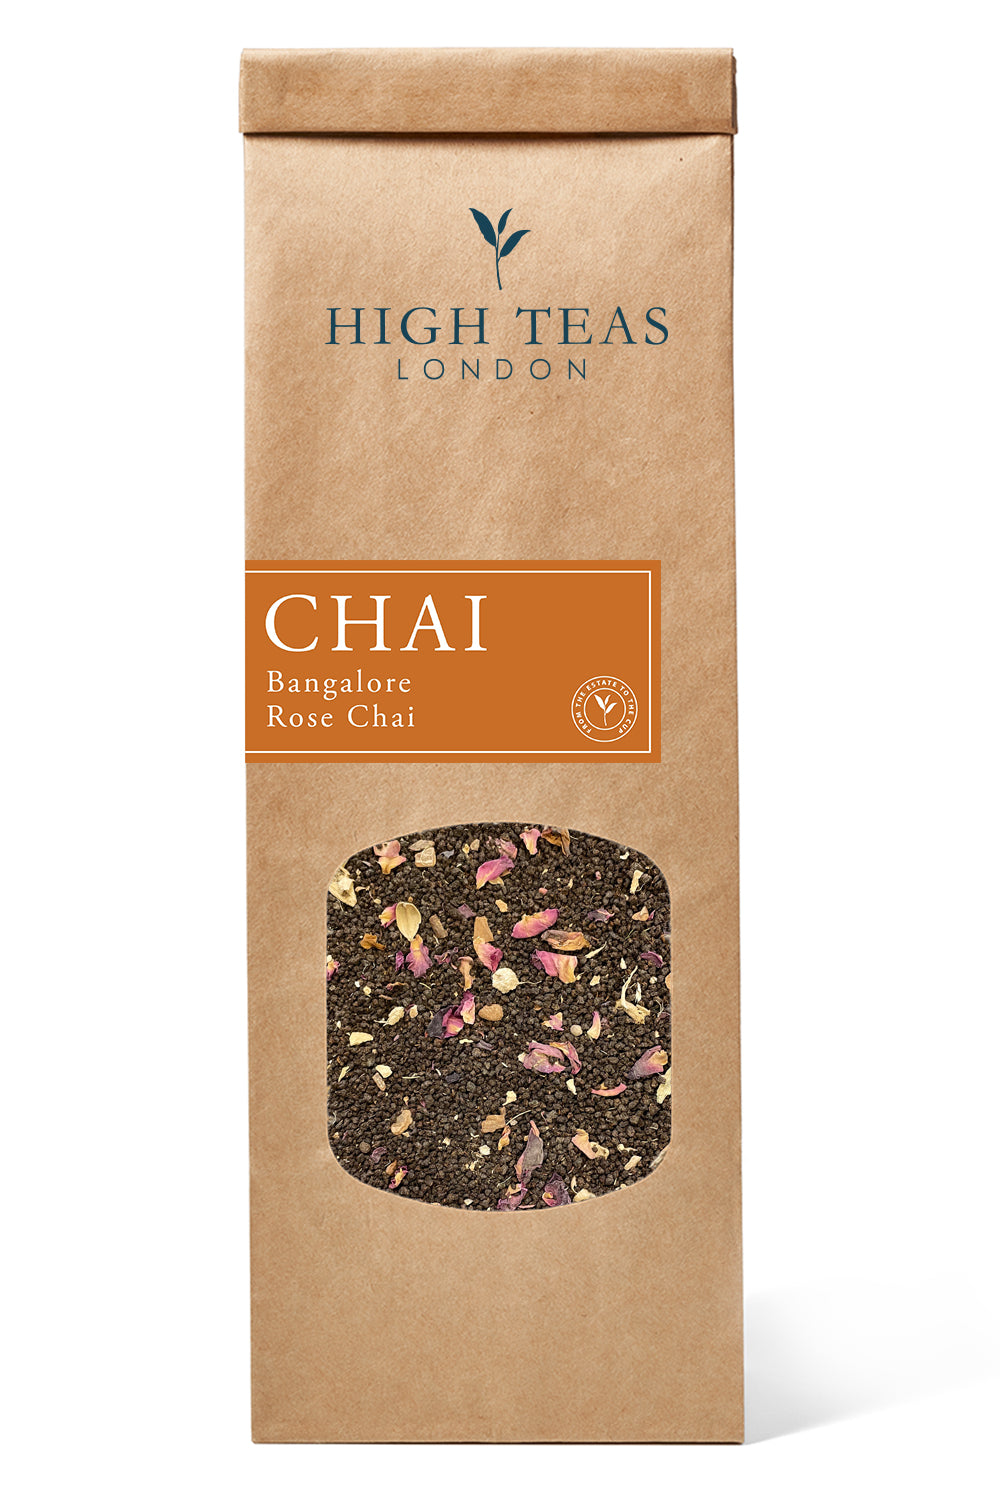 Bangalore Rose Chai-50g-Loose Leaf Tea-High Teas